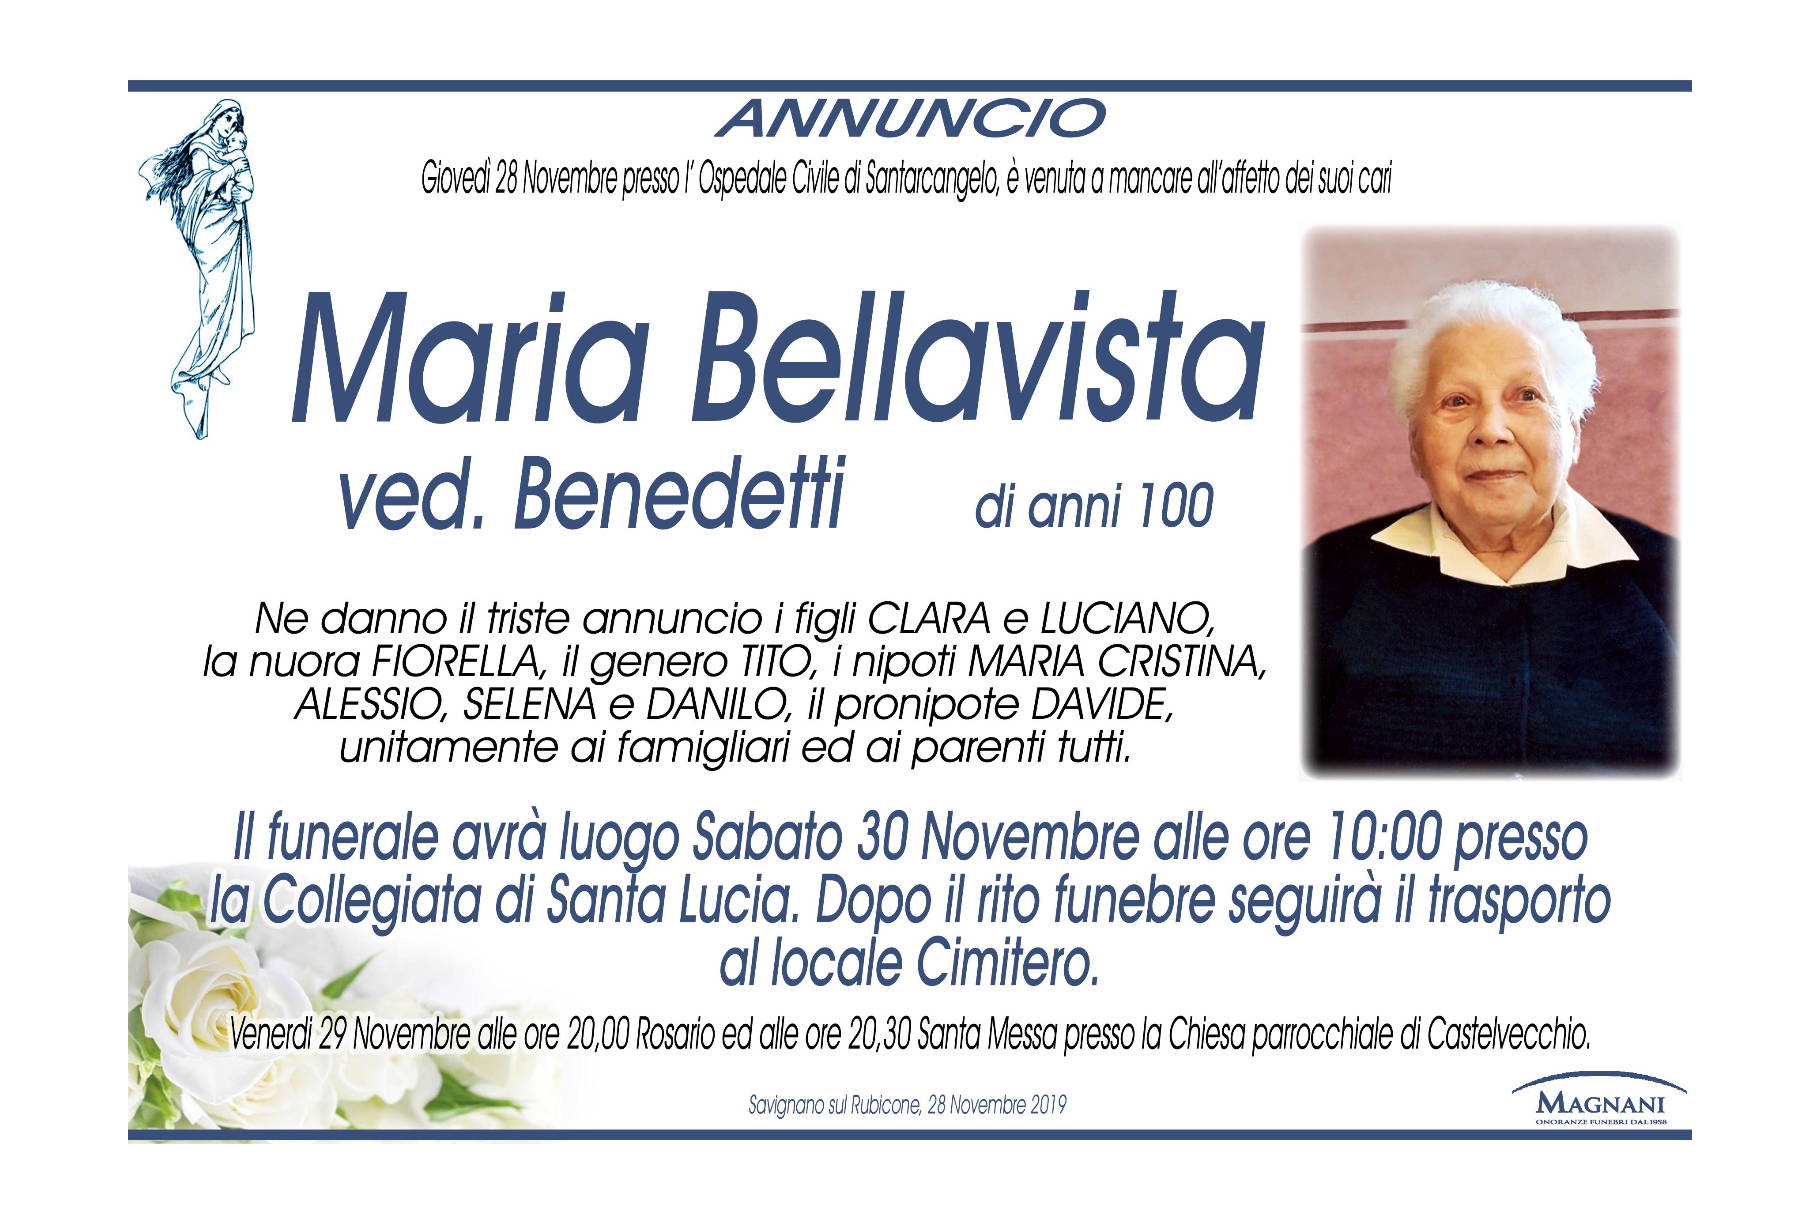 Maria Bellavista